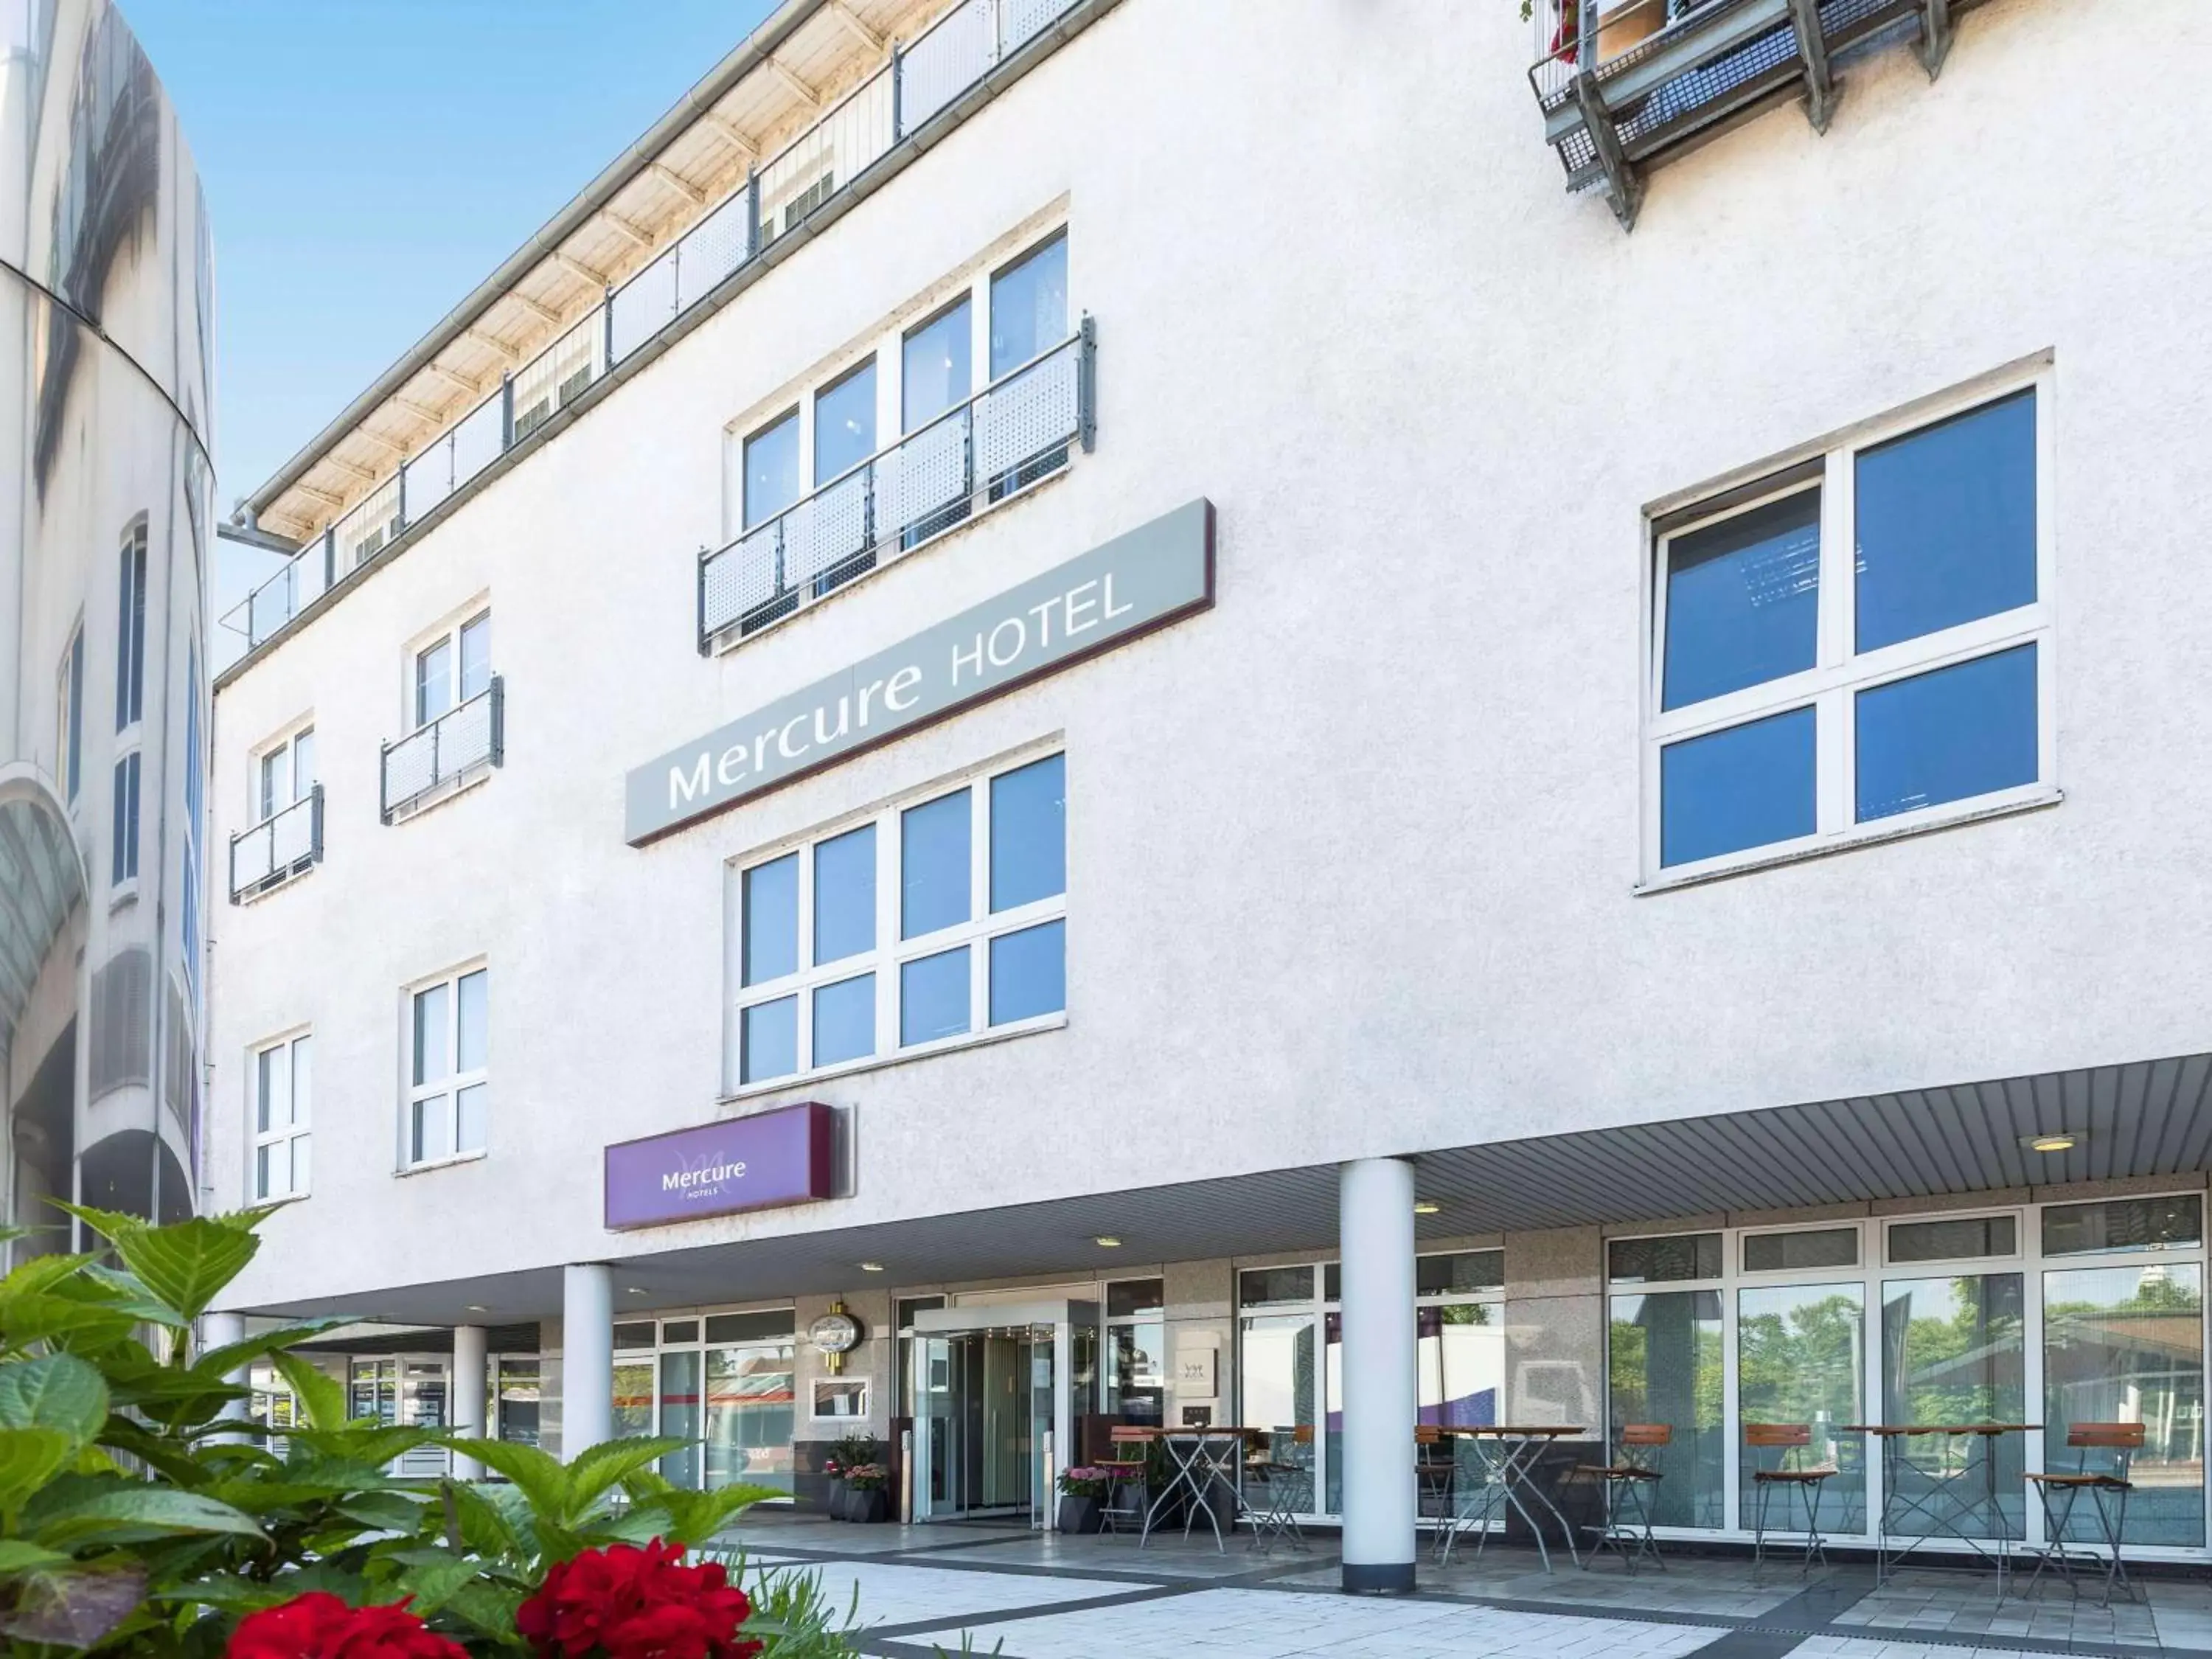 Property building in Mercure Hotel Bad Oeynhausen City